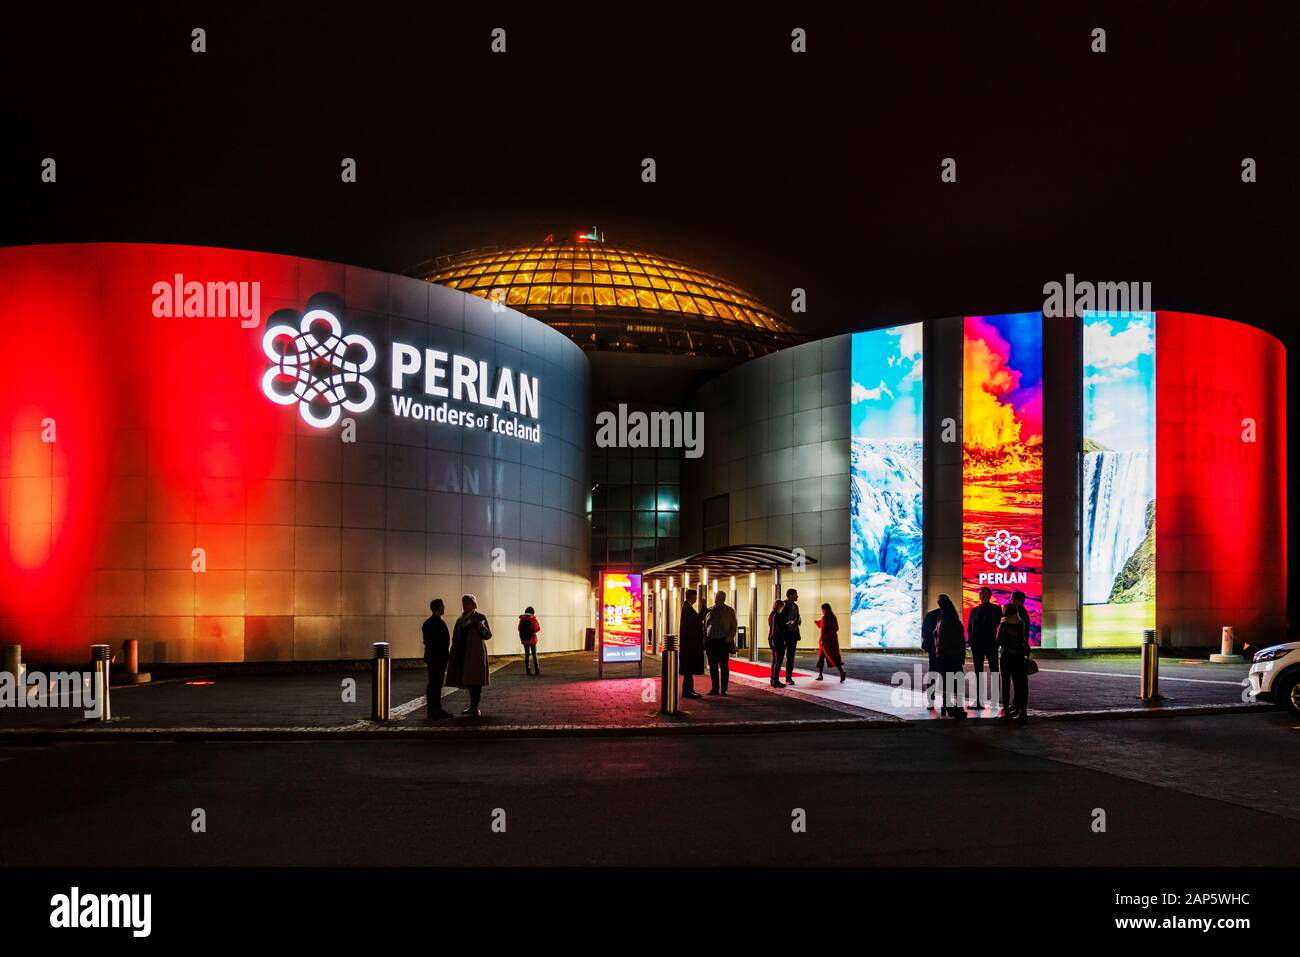 Perlan (The Pearl) - Wonders of Iceland Museum, Reykjavik, Iceland Stock Photo